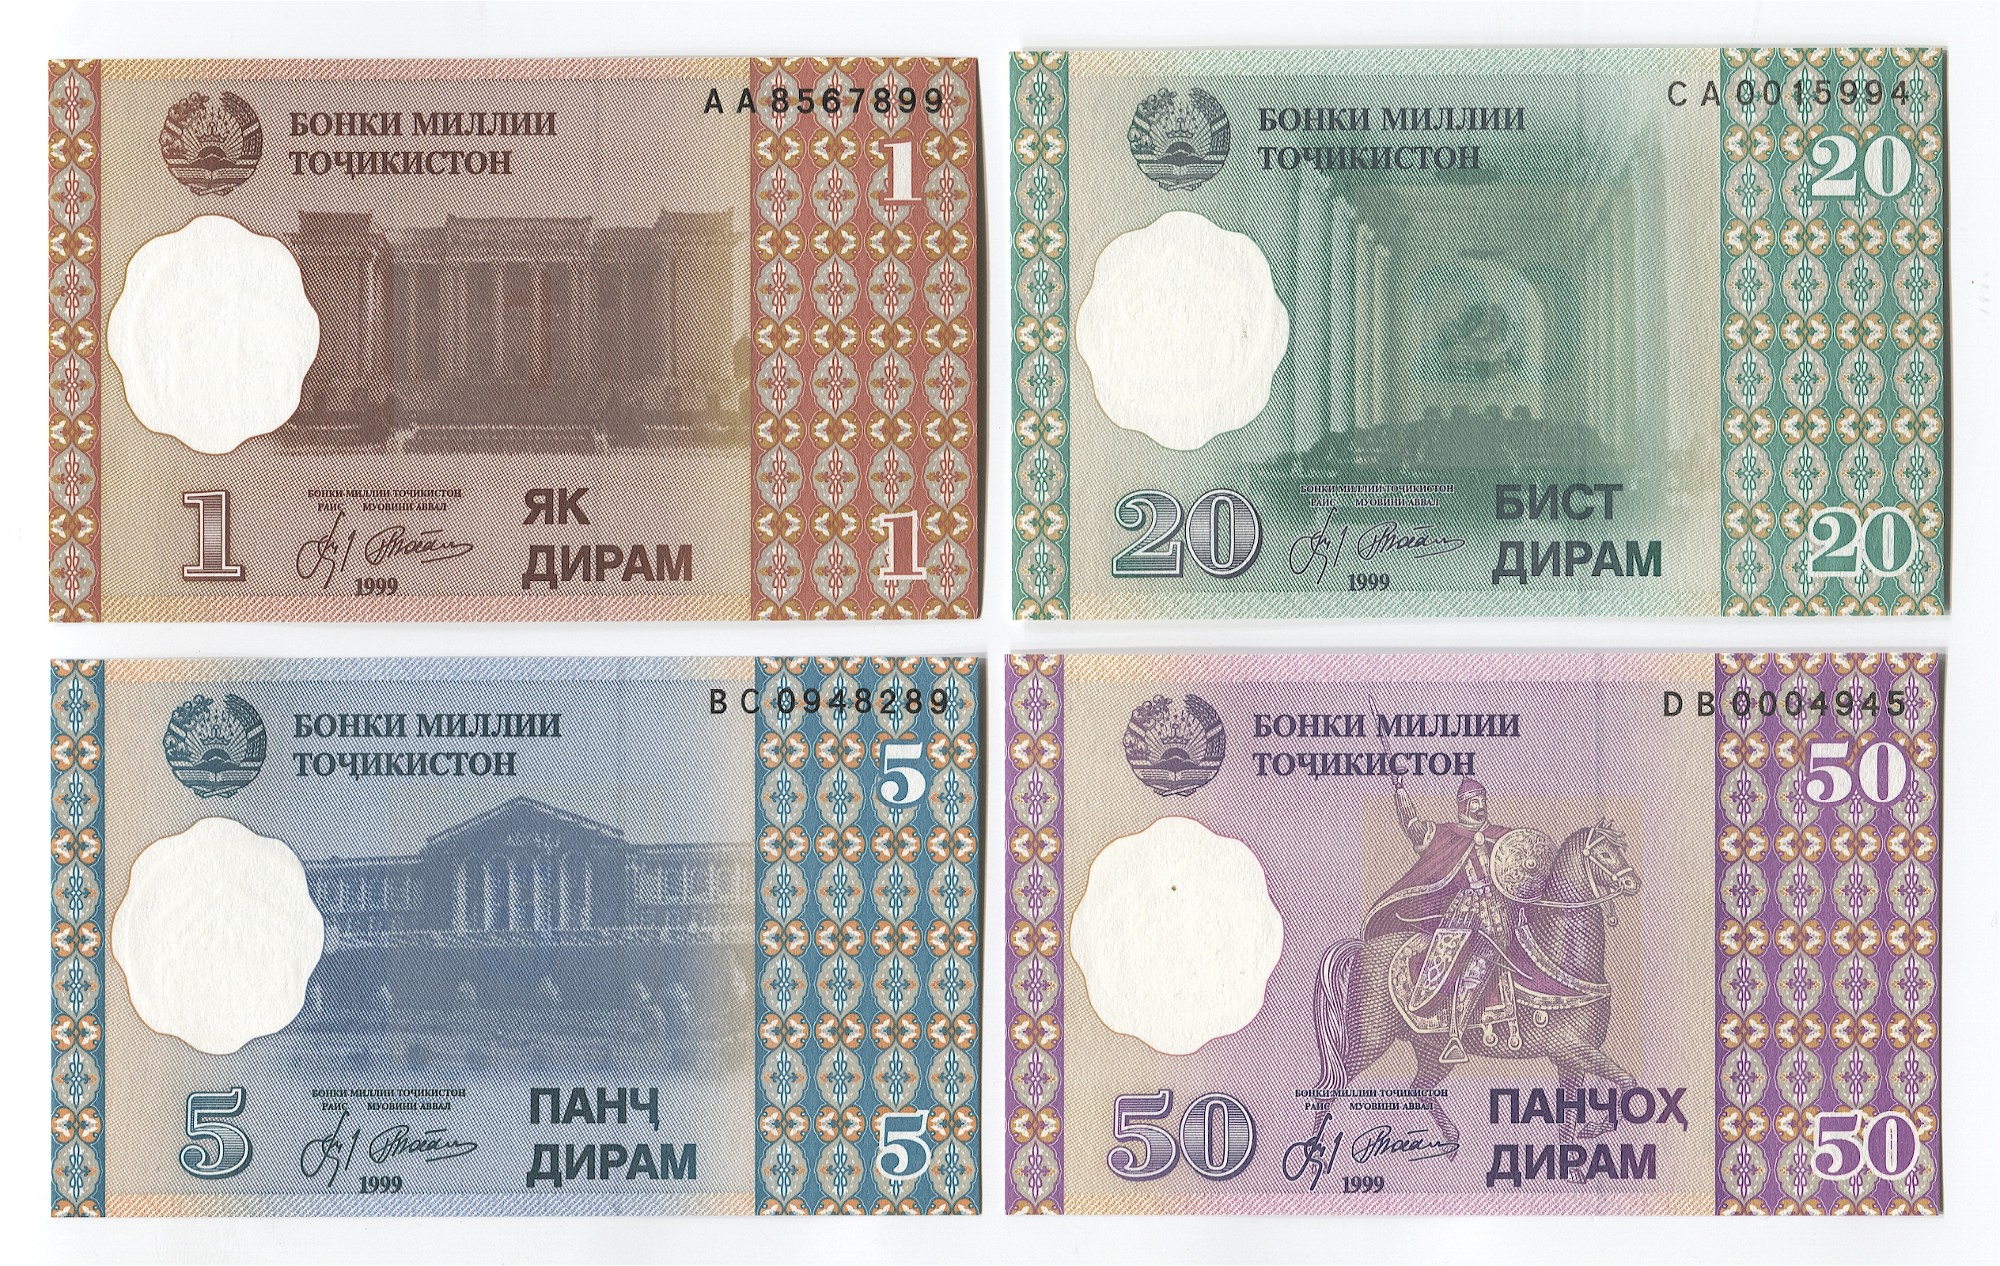 Национальная валюта таджикистана. 50 Дирам 1999 Таджикистана. Таджикистан 20 дирам 1999 год пресс UNC. Банкнота Таджикистан 20 дирам 1999. Купюра Таджикистан 1 дирам 1999.